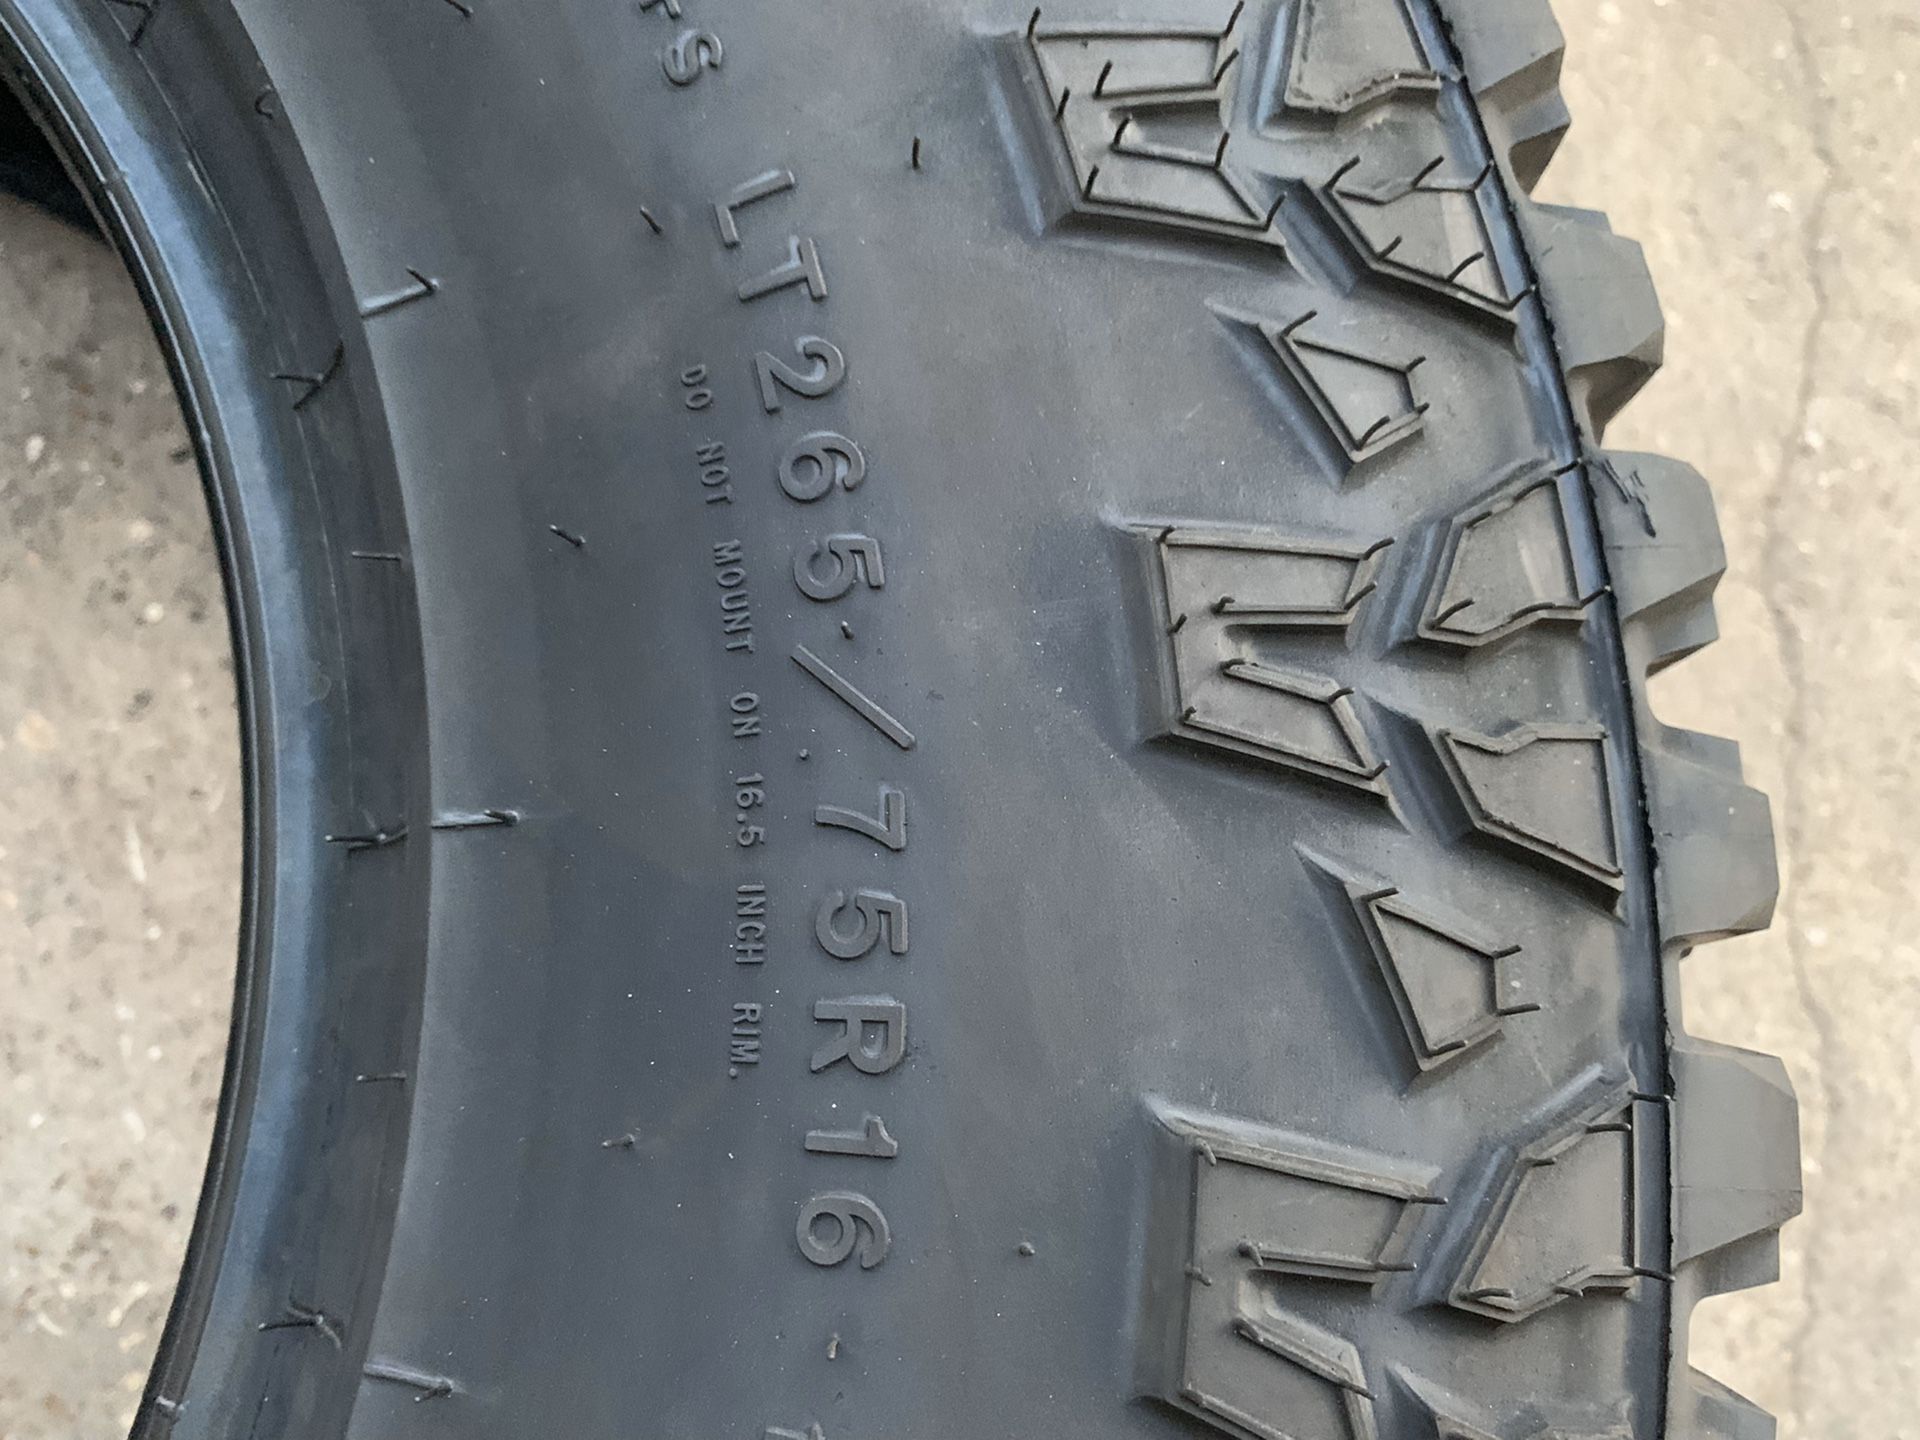 New Goodyear All Terrain TireS LT265/75r16 Good Year Llantas Nuevas 265/75r16 Load Range E 10 ply 265 / 75 r16 or 265/75/16 New 16” Tire 2657516